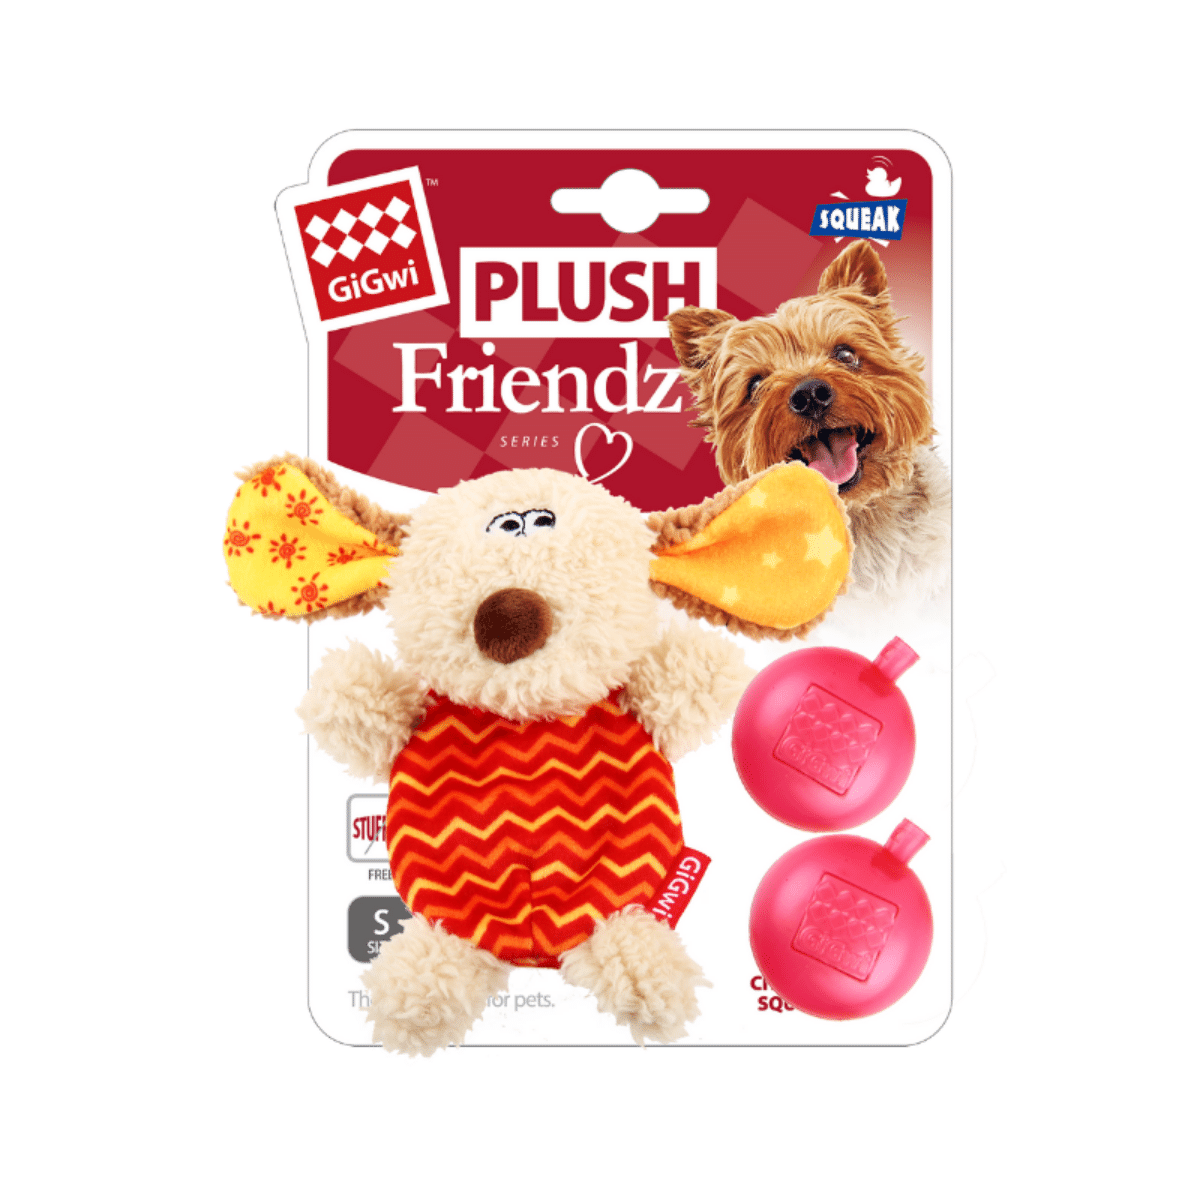 GiGwi Plush Friendz Dog with Refillable Squeaker